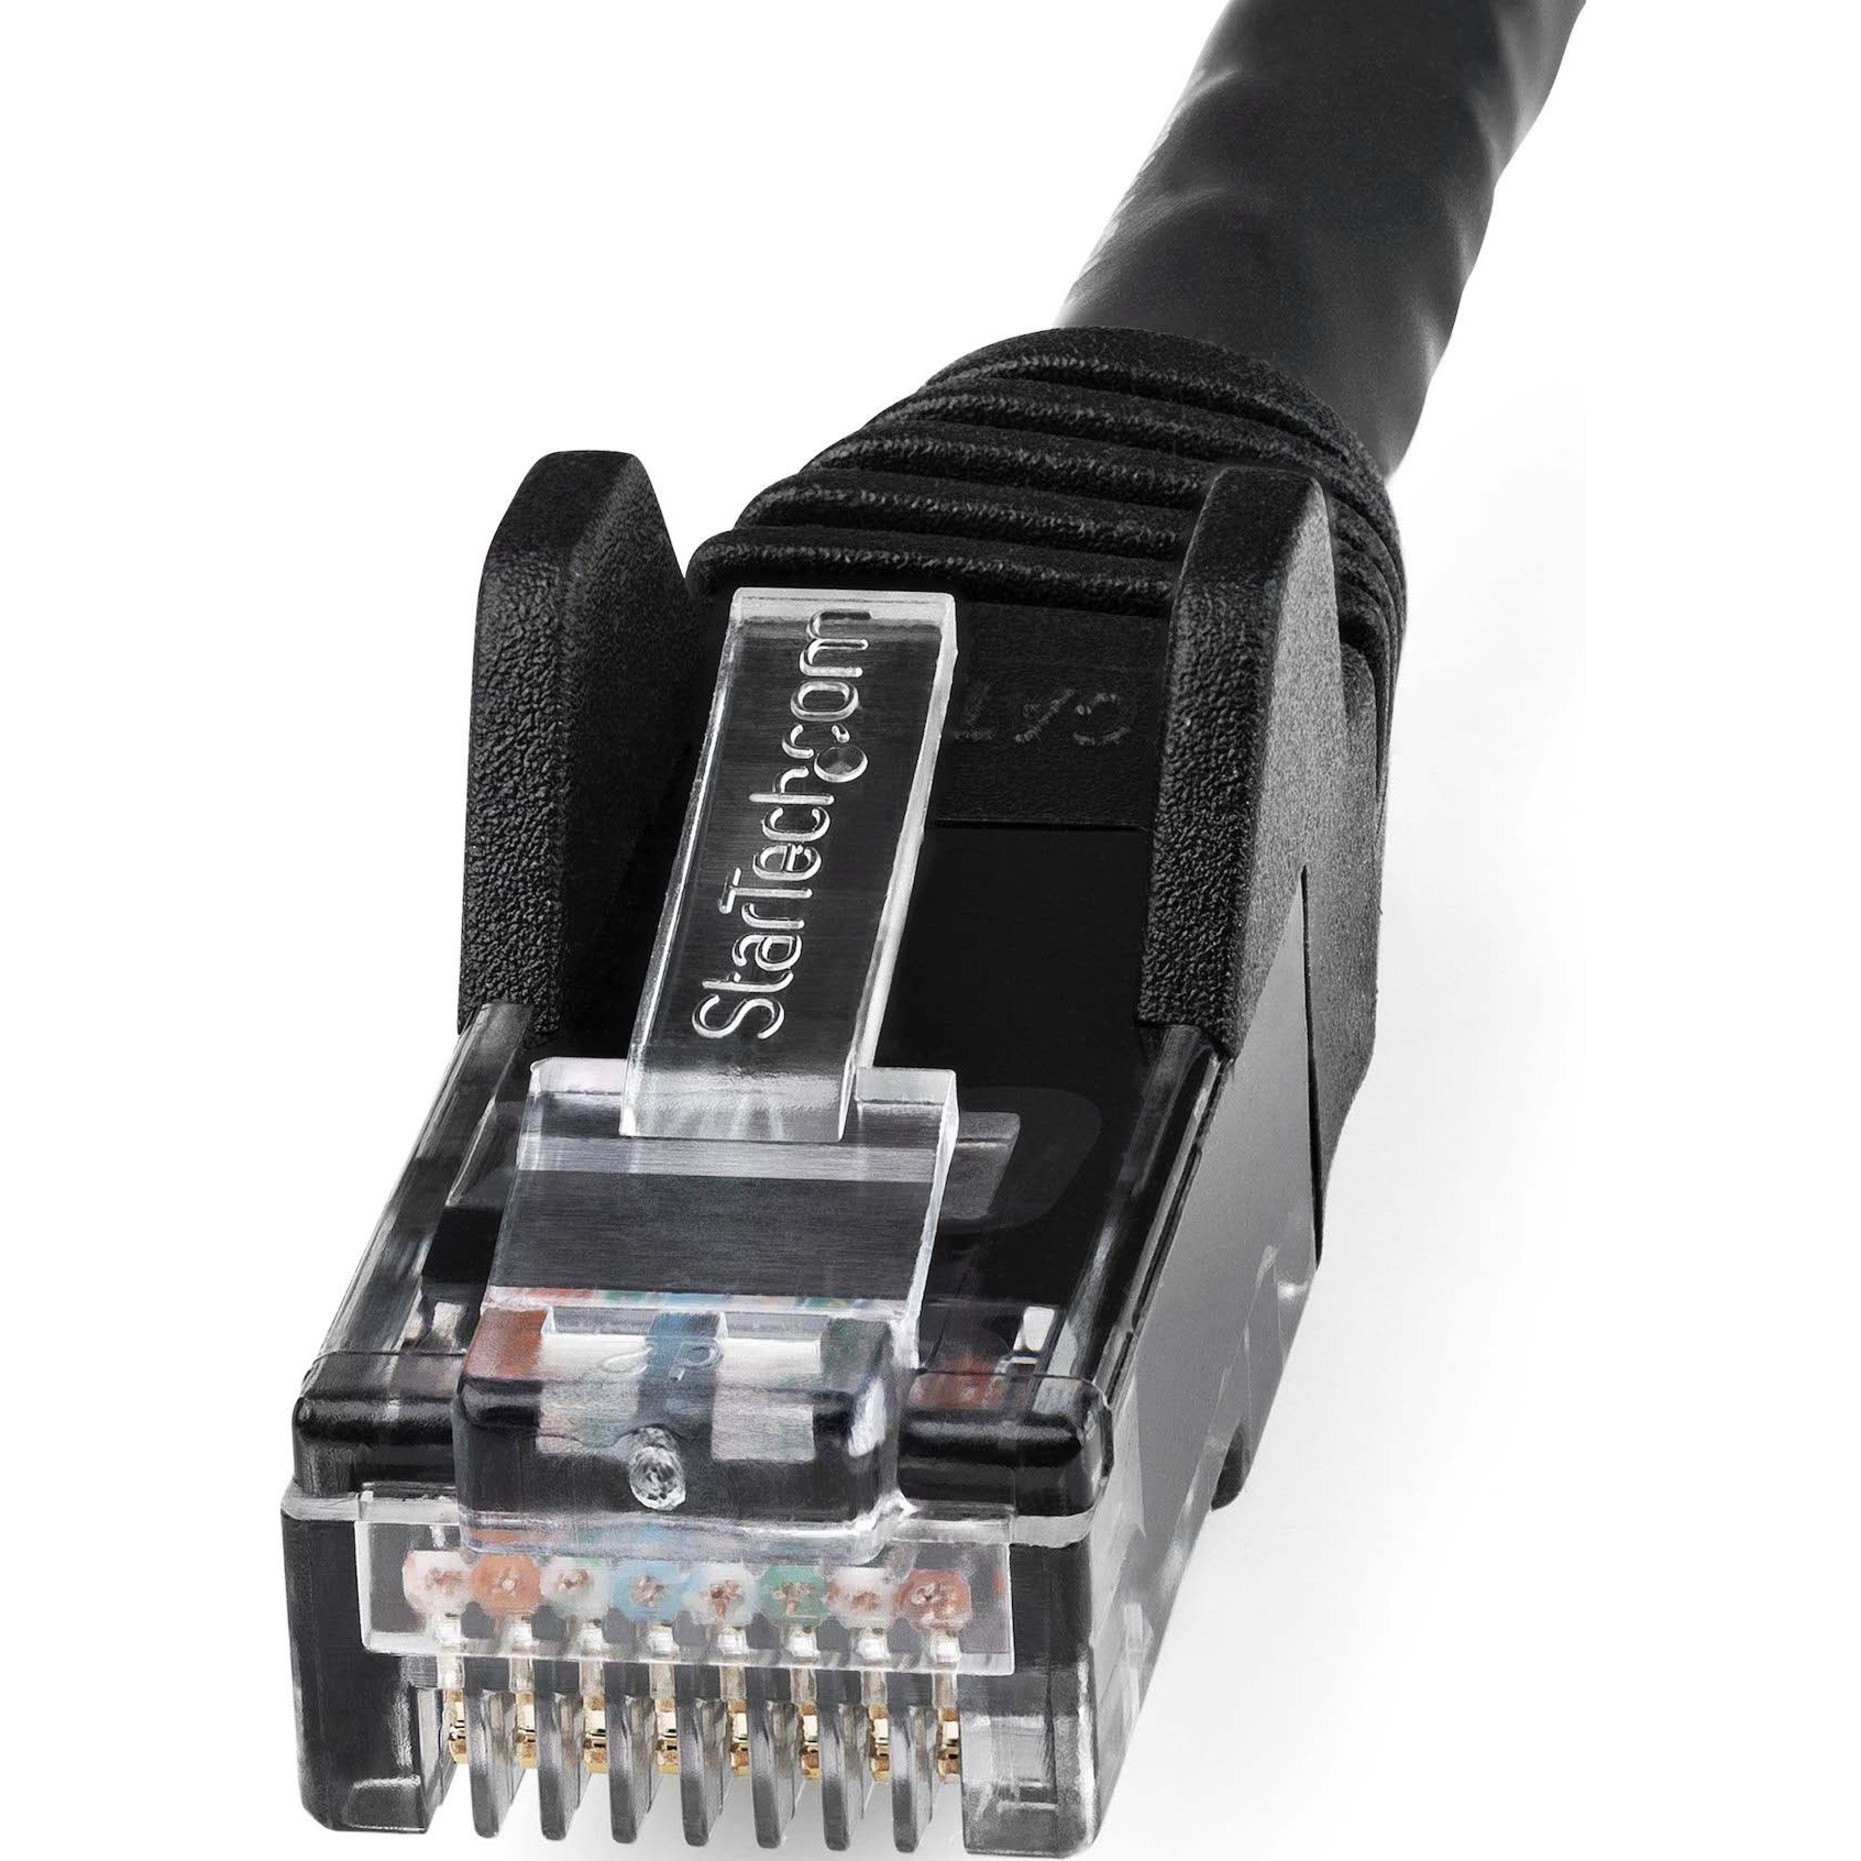 6m Black Ethernet Cable - CAT5e Network Cable